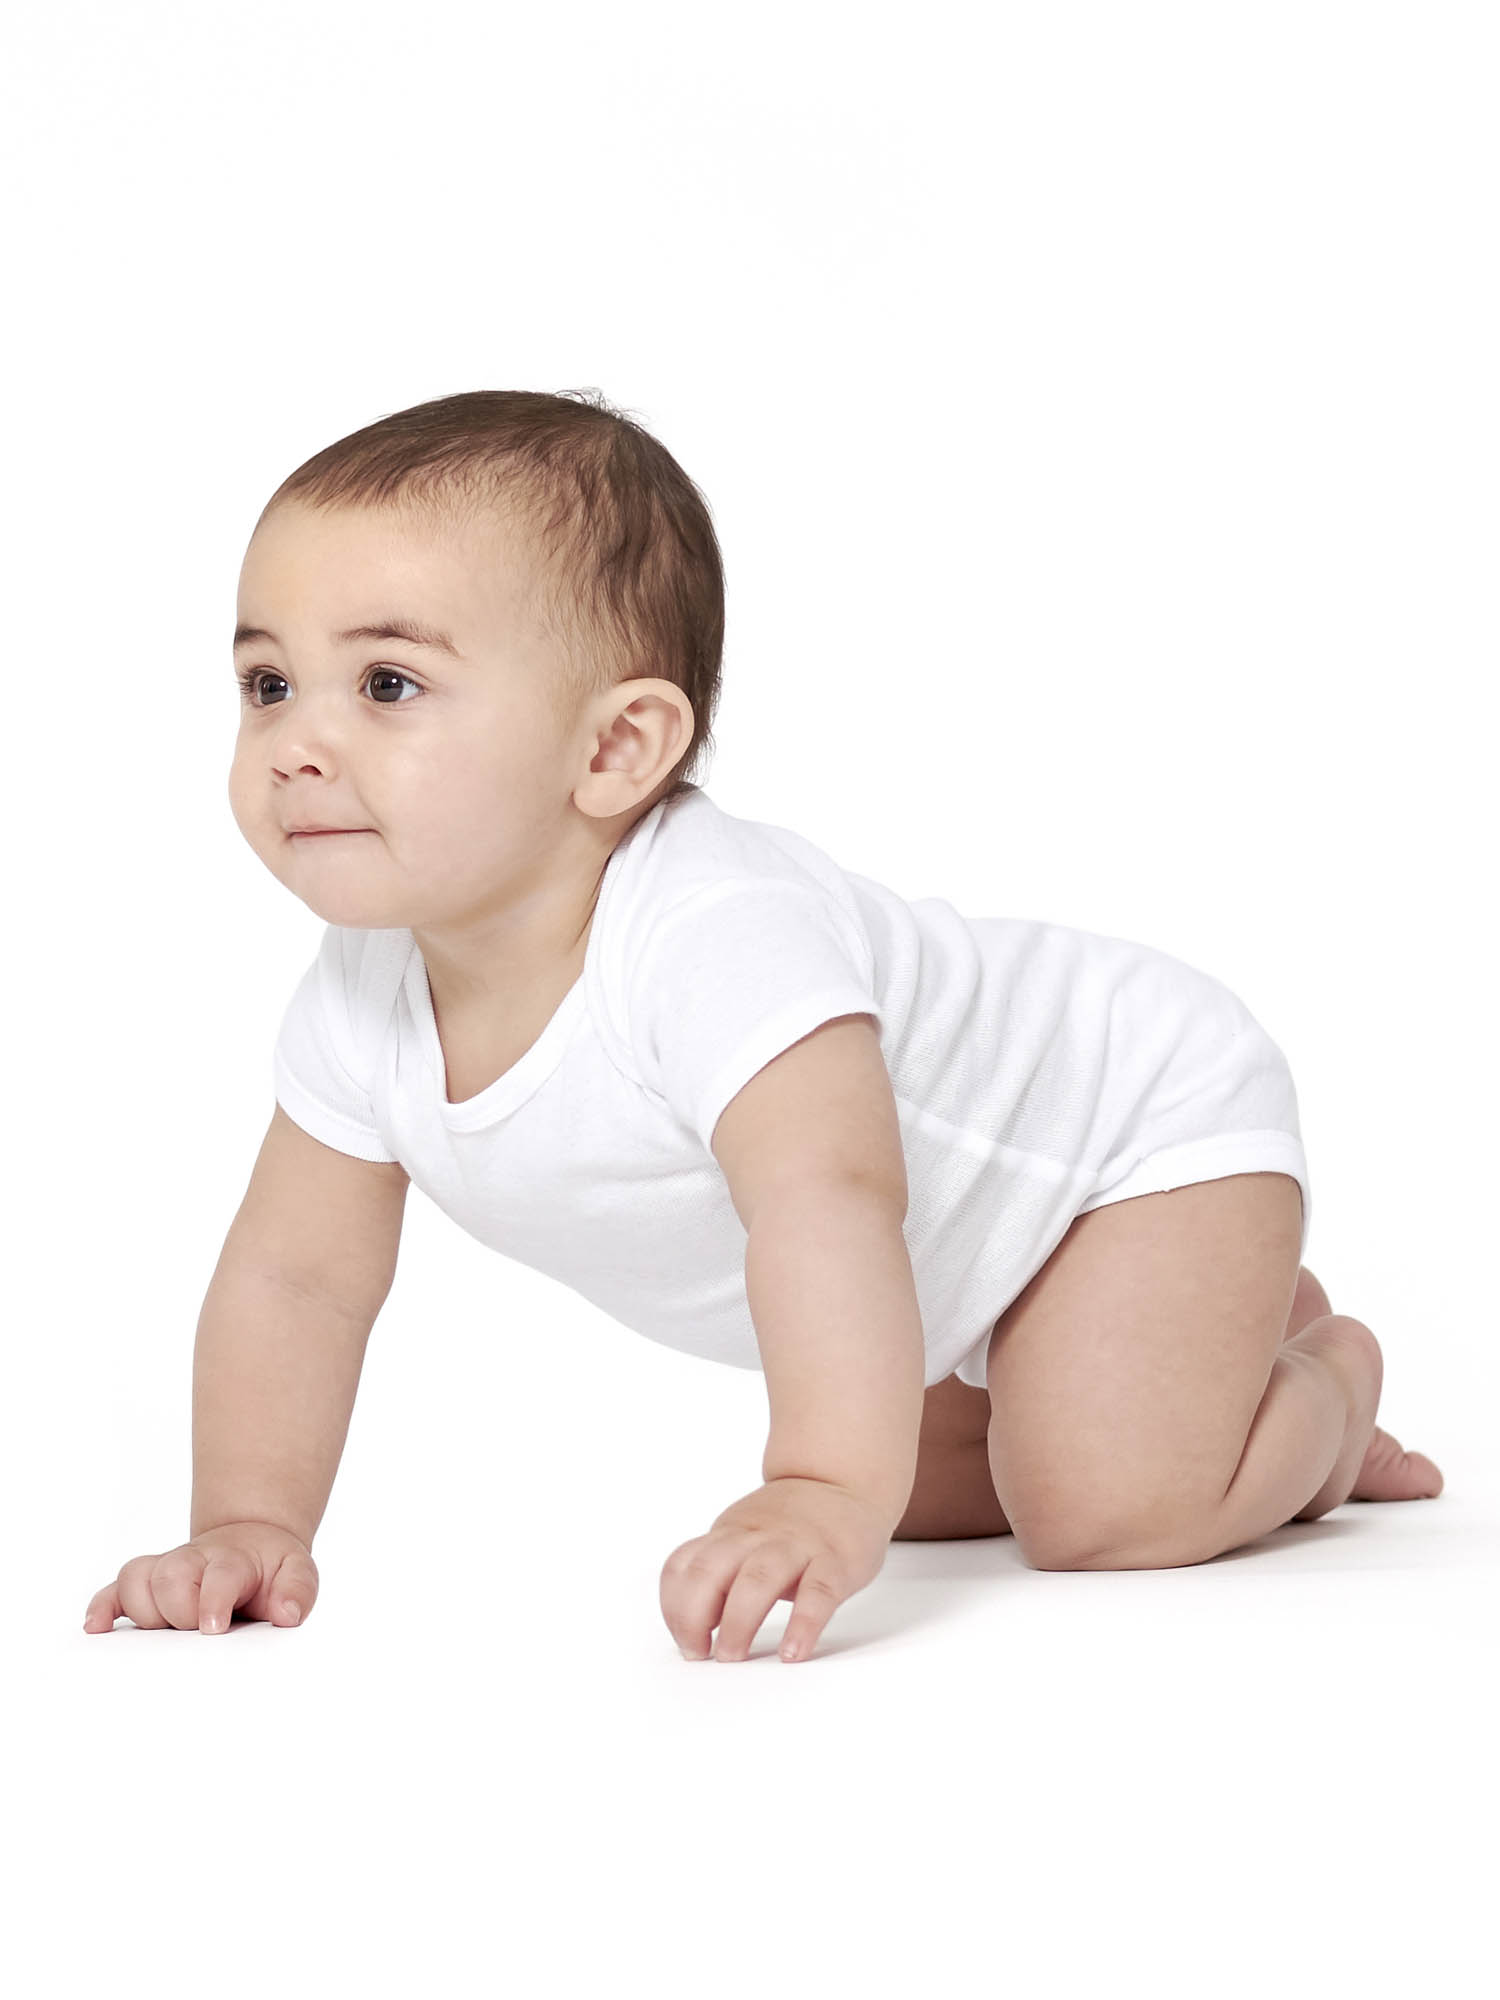 Gerber Baby Unisex White Short Sleeve Cotton Onesies Bodysuits, 8-Pack, Preemie-24 Months - image 3 of 13